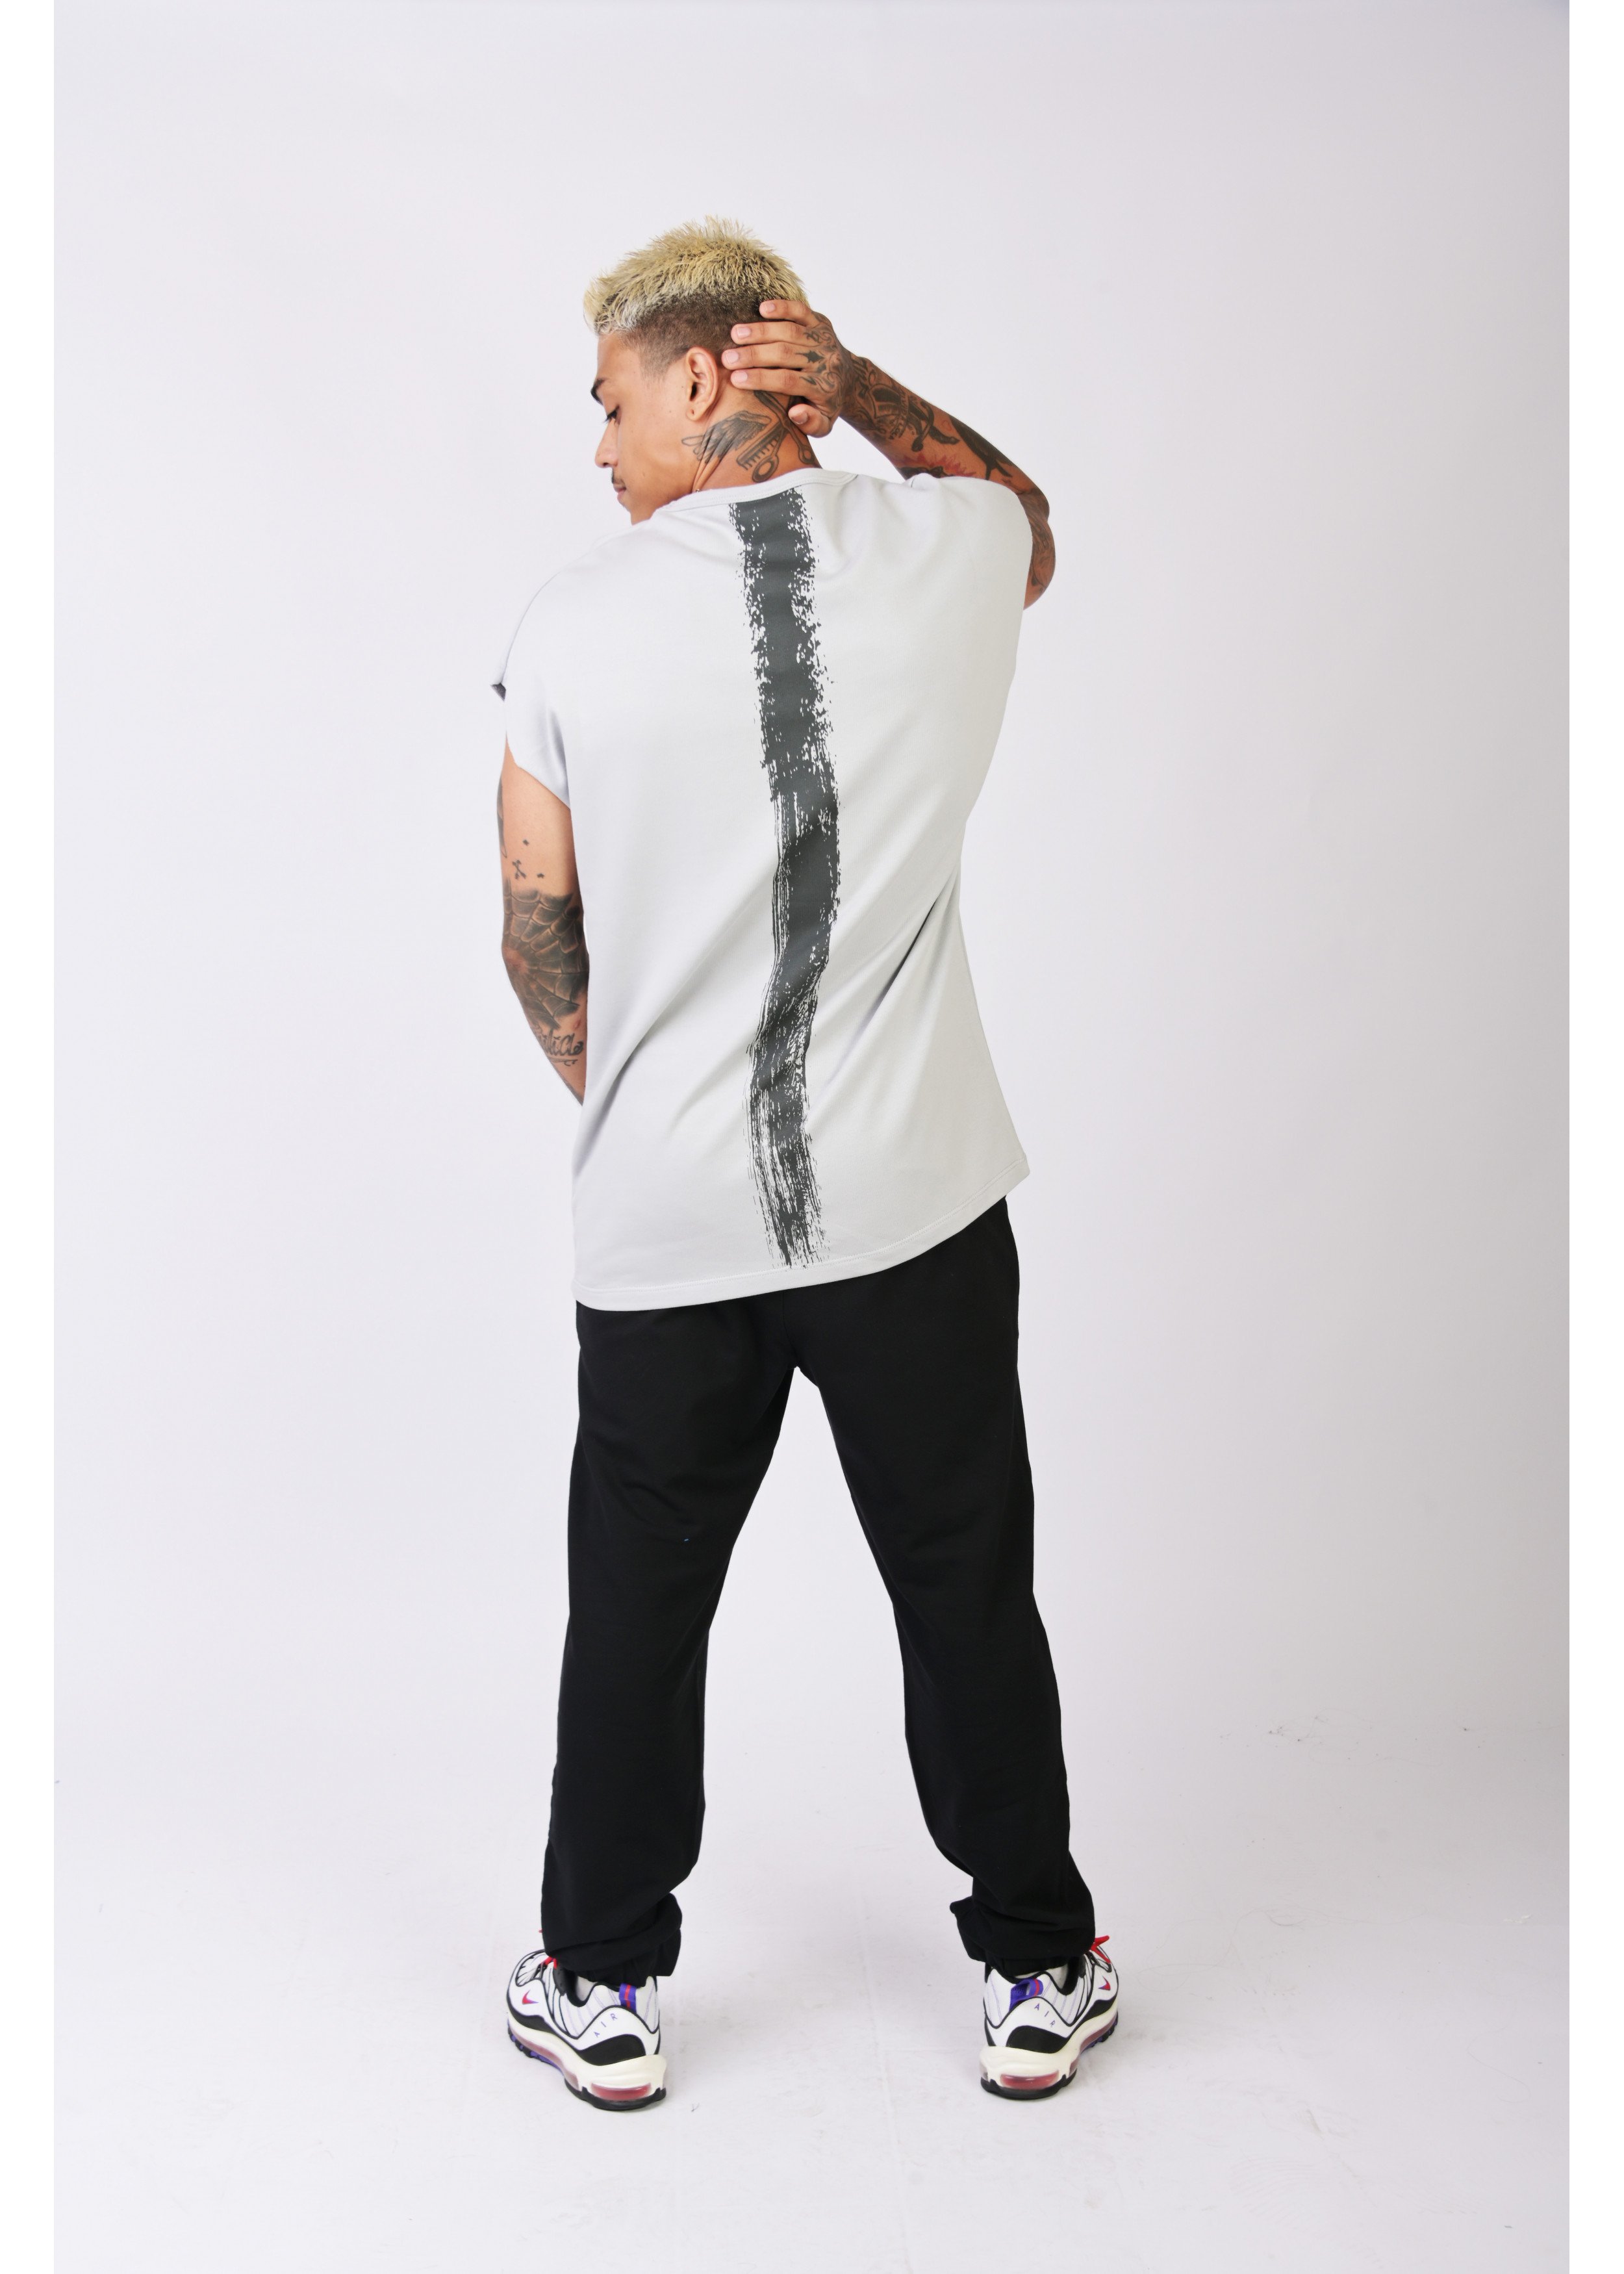 Short Sleeve Over Sized T-shirt - Grey